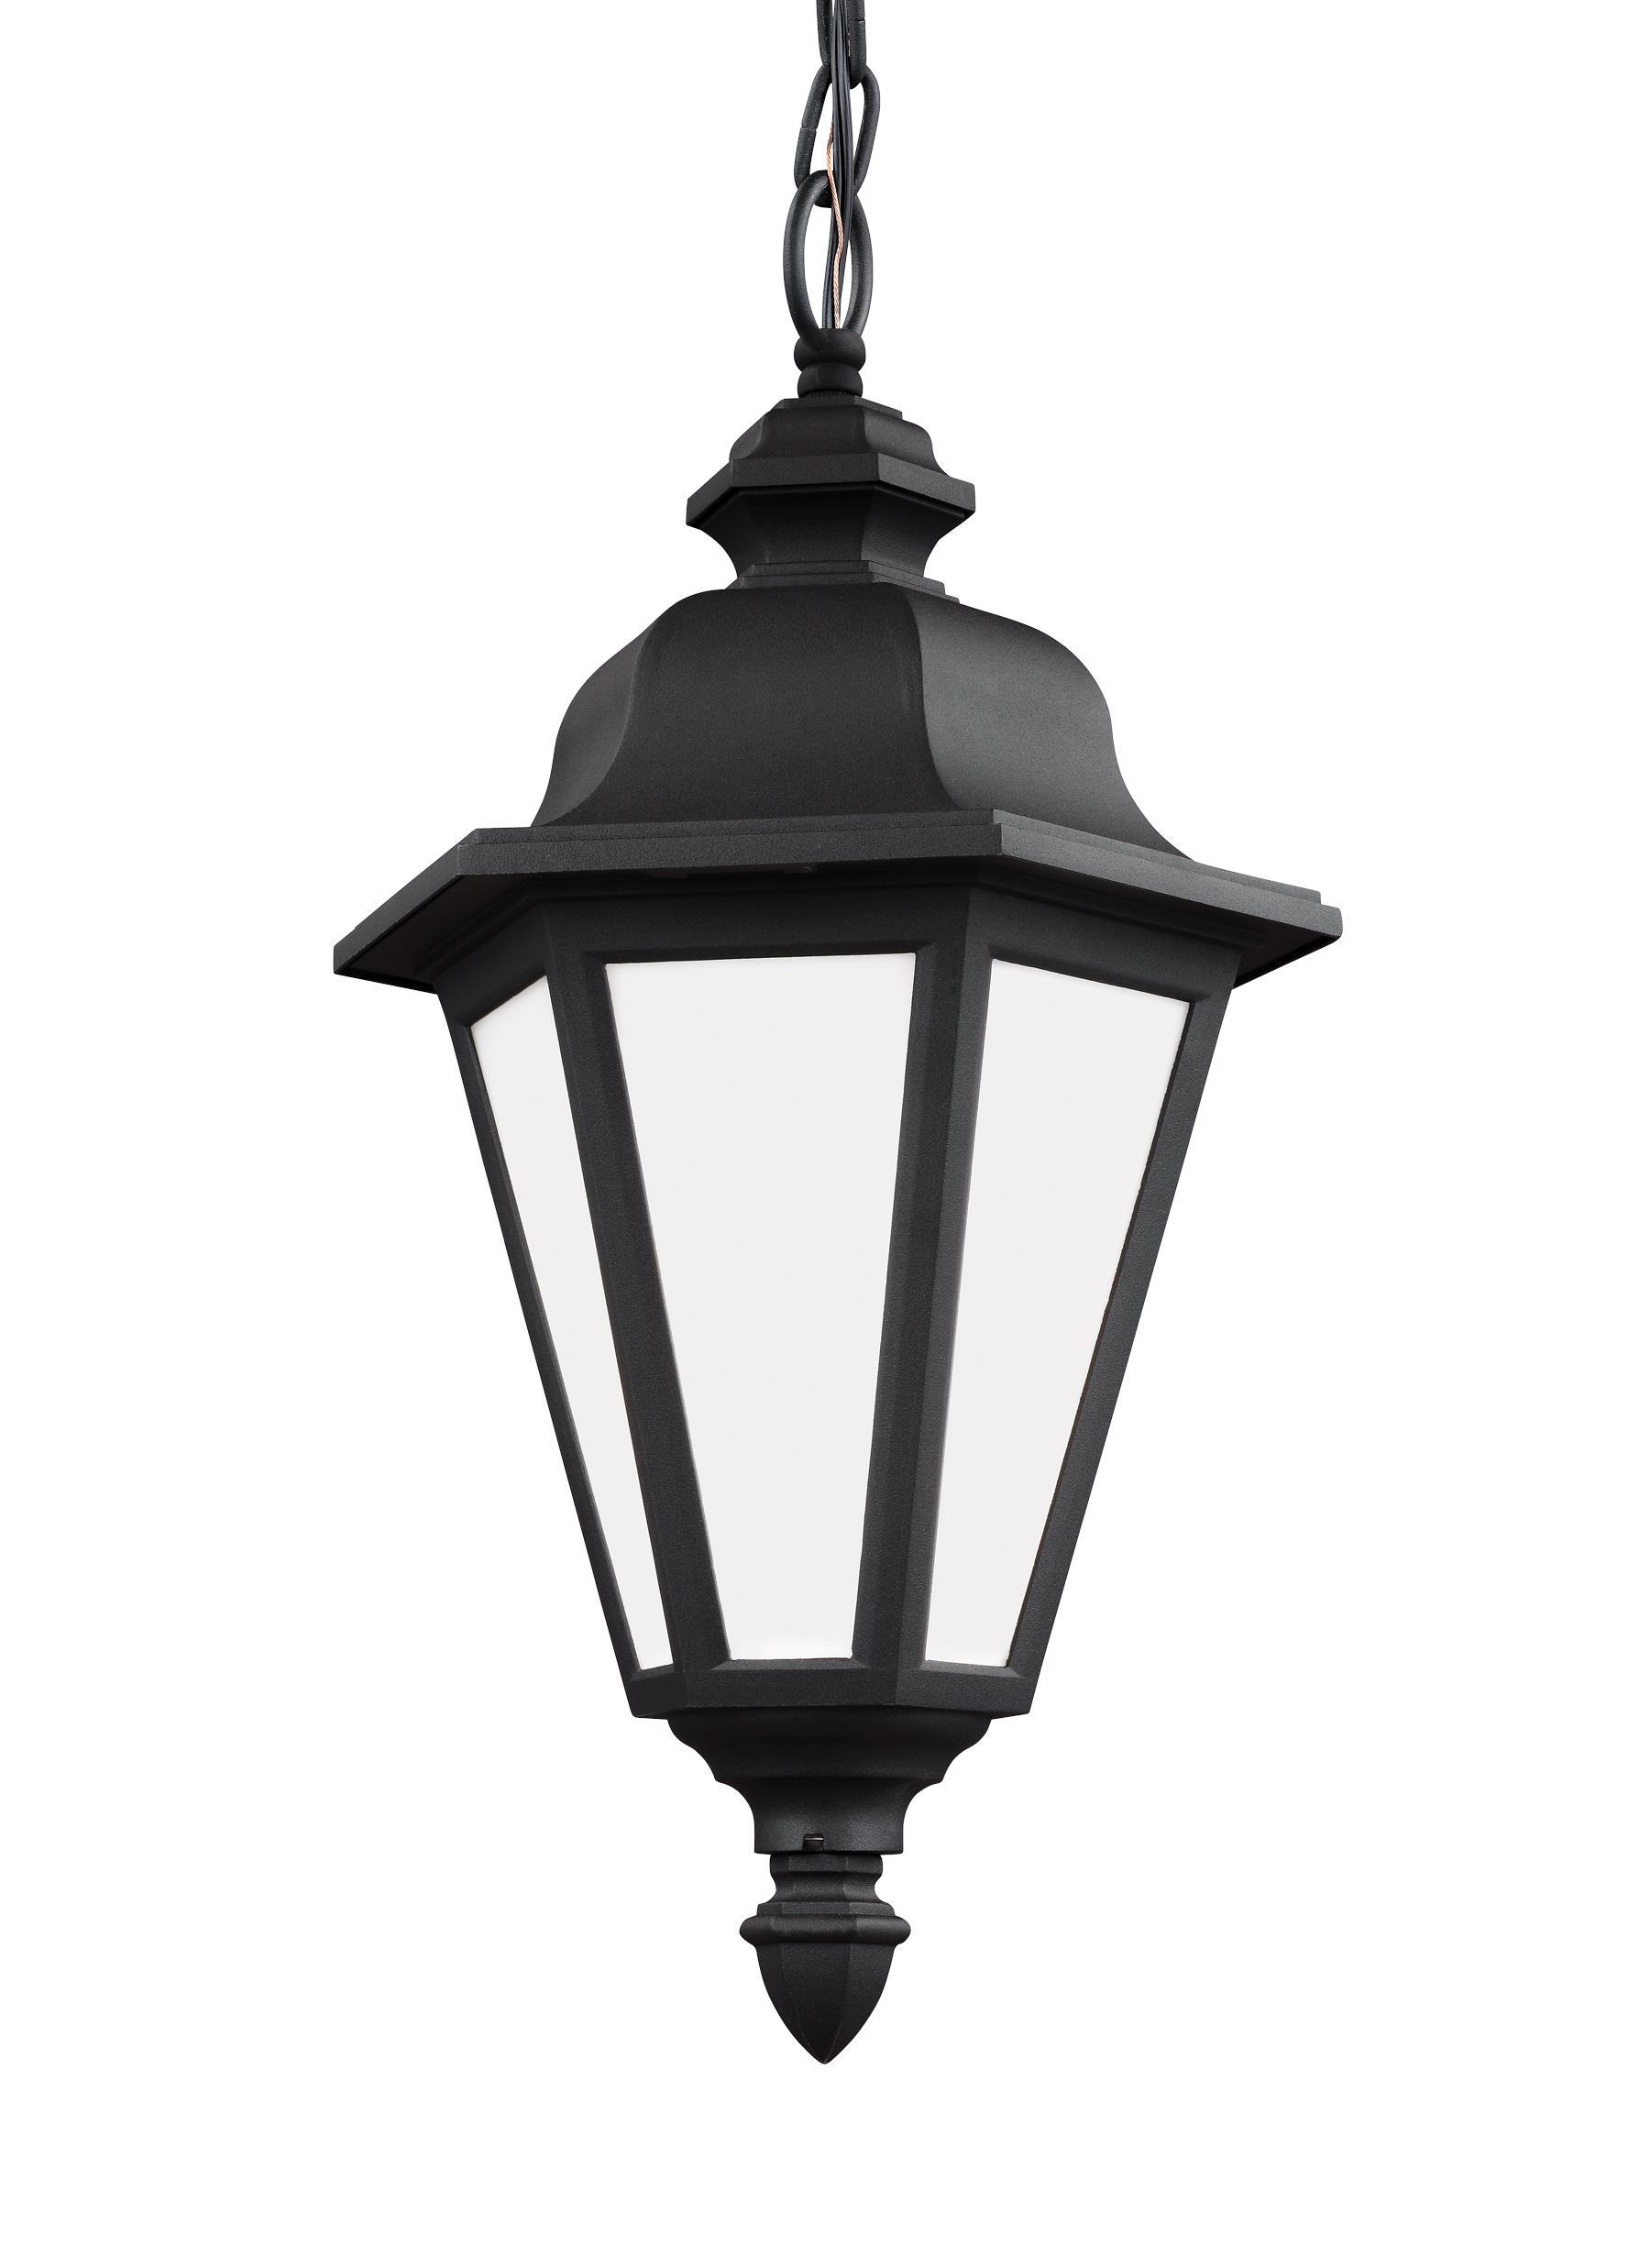 Brentwood One Light Outdoor LED Pendant - Black Outdoor Sea Gull Lighting 